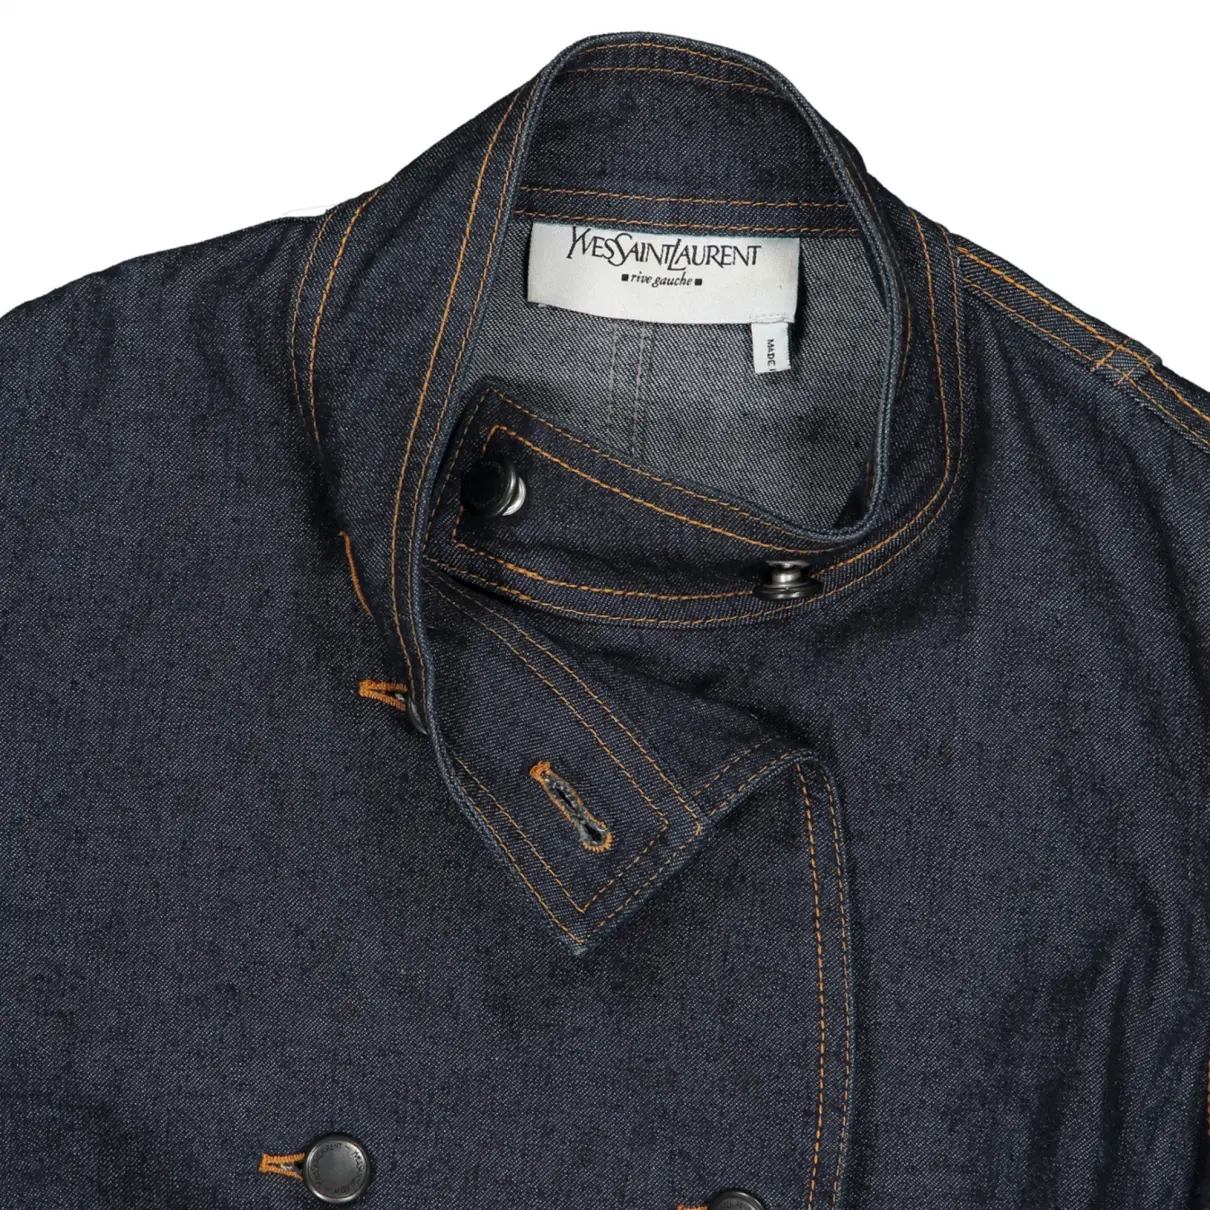 Buy Yves Saint Laurent Jacket online